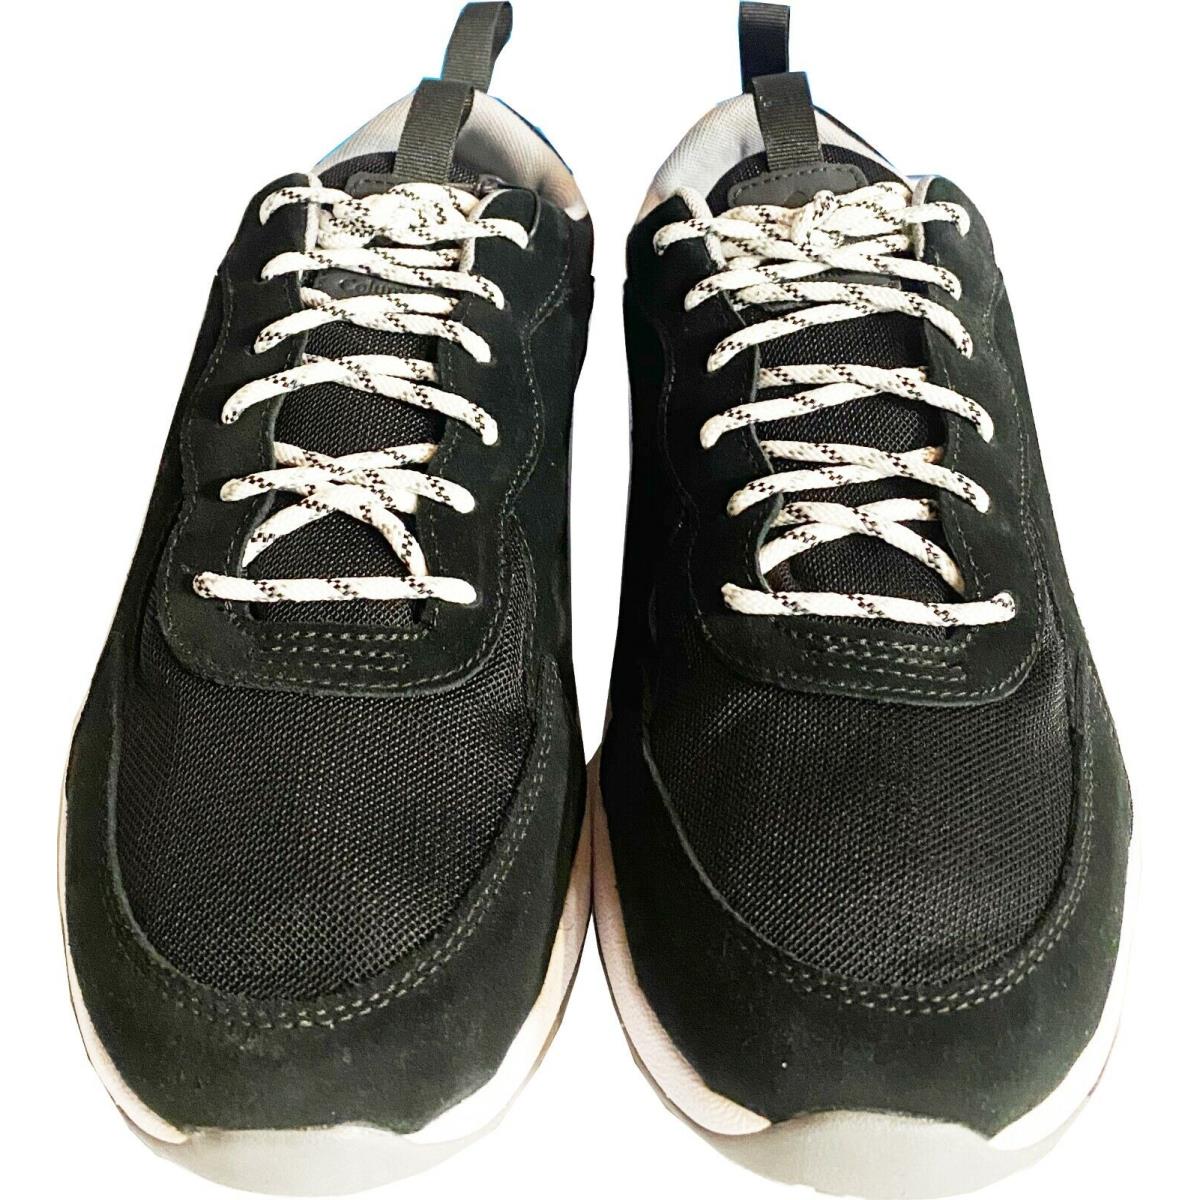 Columbia shoes Horizon Lane Waterproof - Black 4